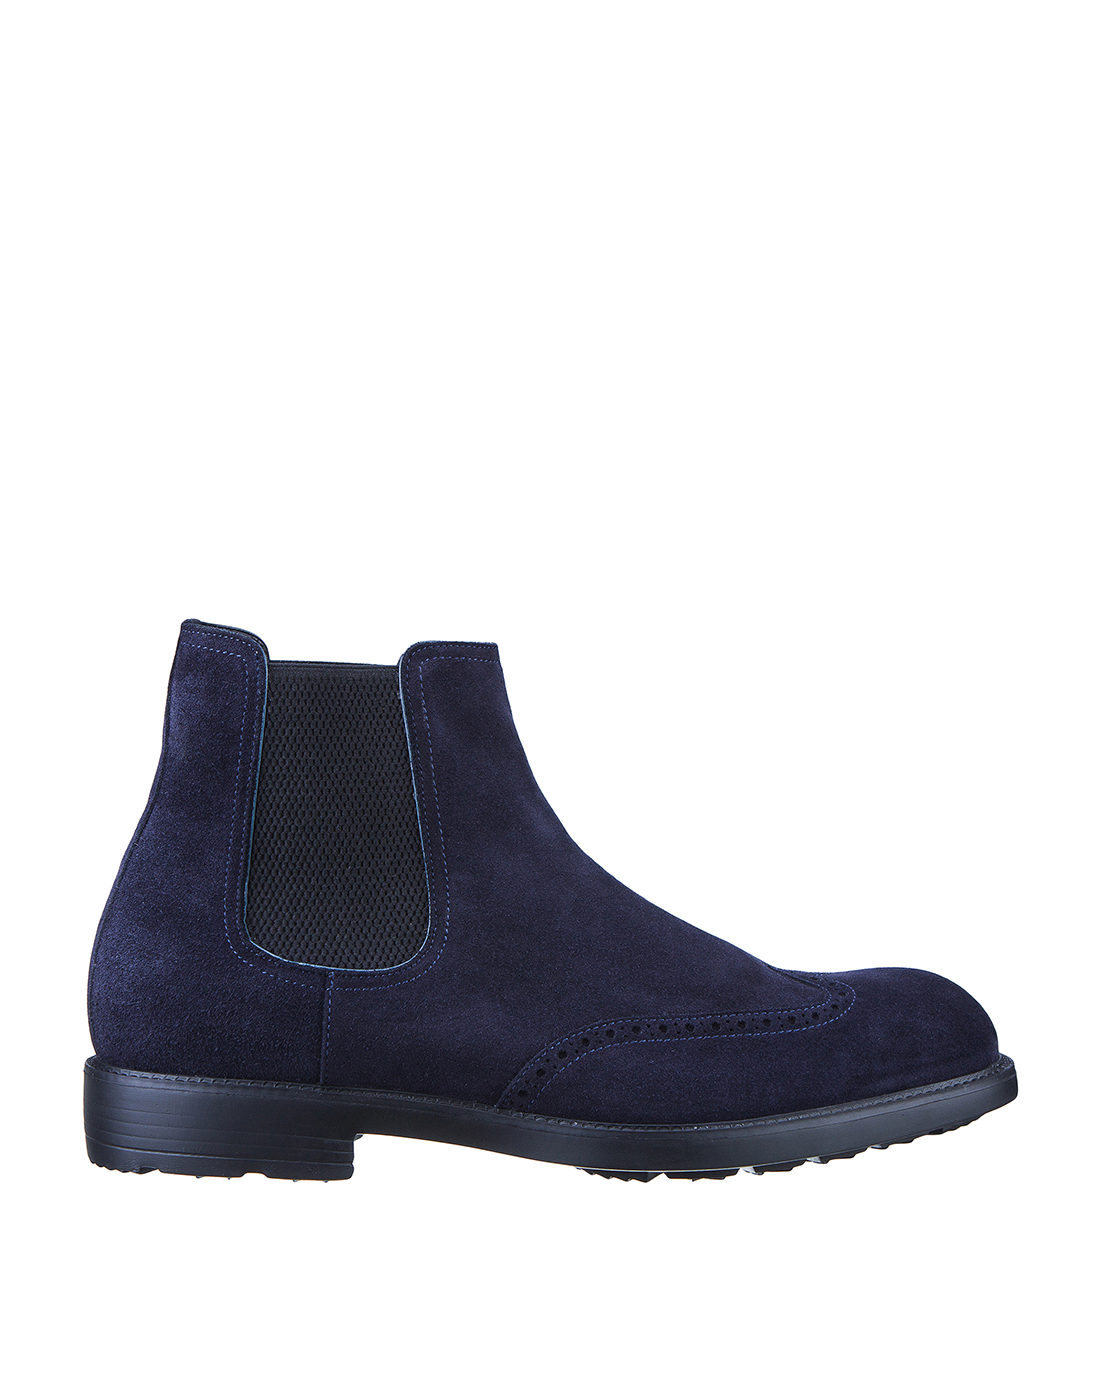 Ботинки синие мужские Moreschi S43249-1